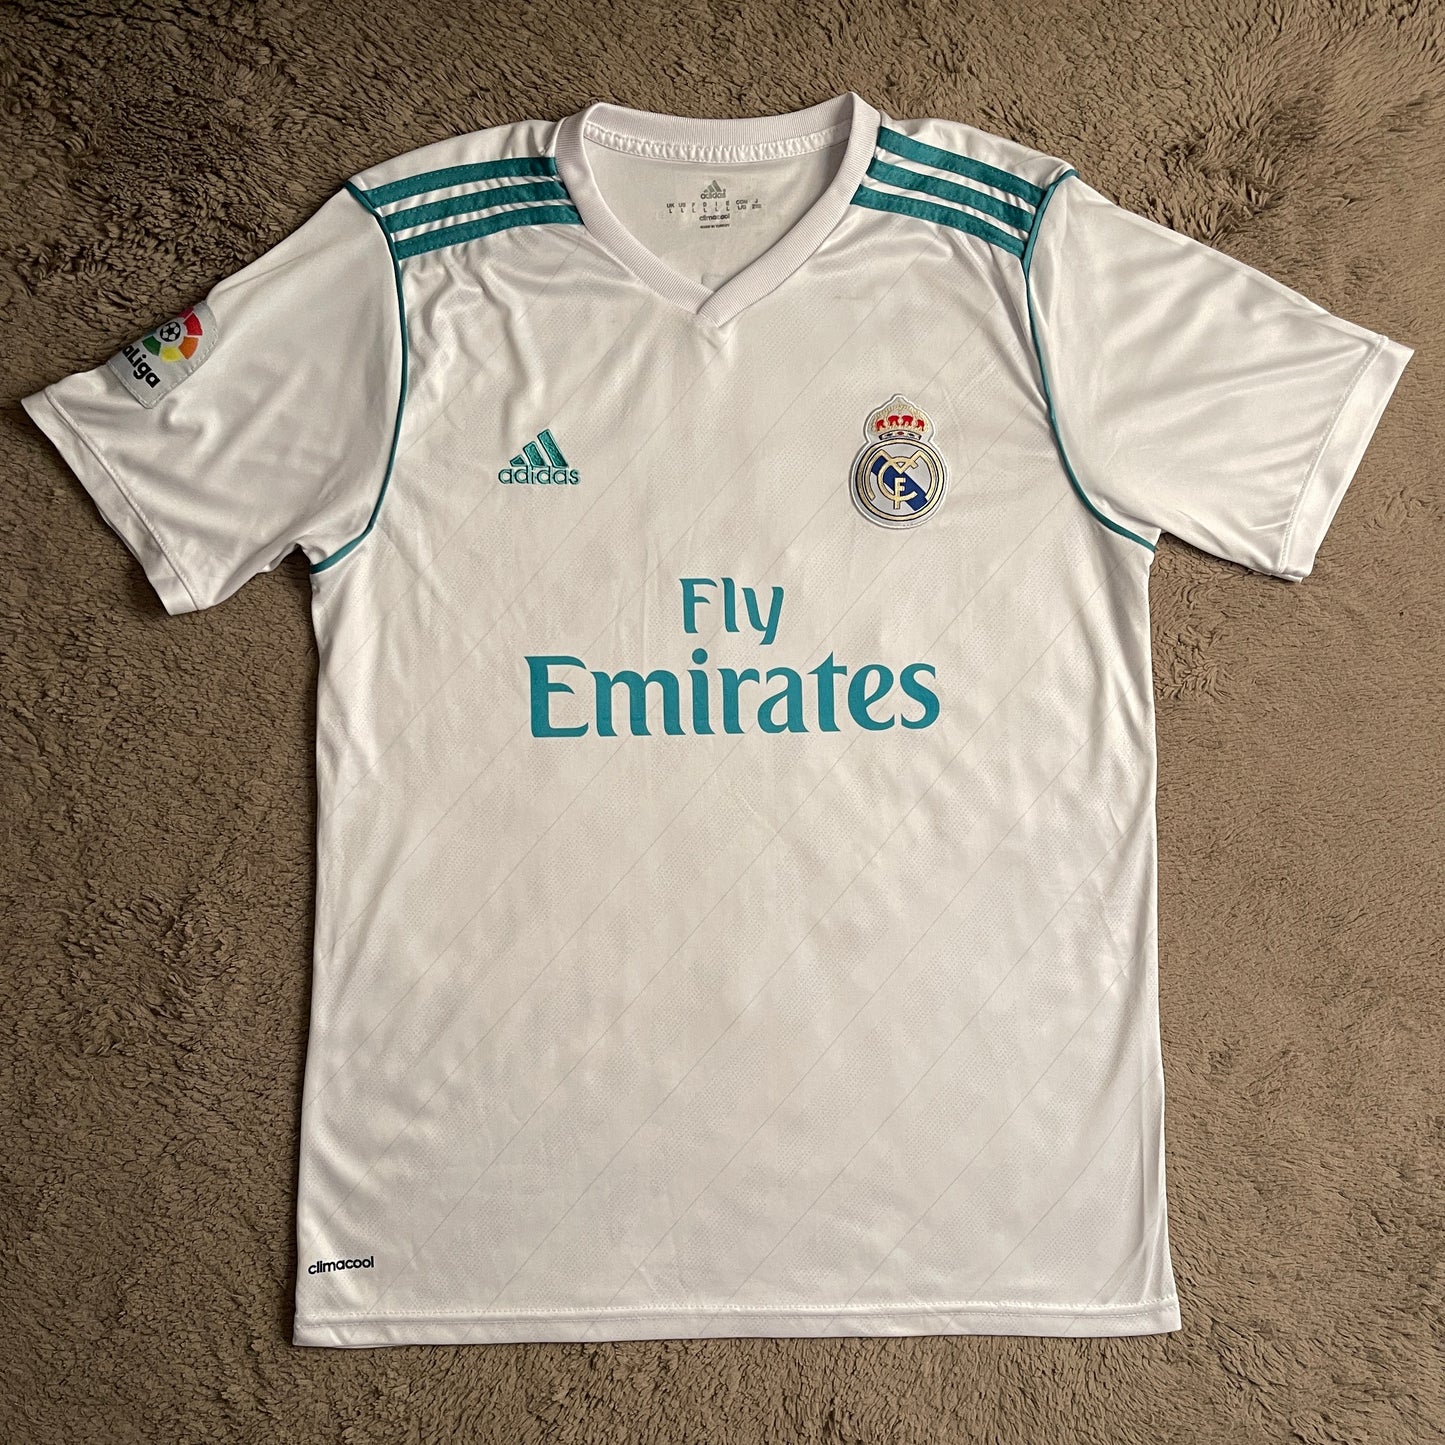 Real Madrid CF #7 Ronaldo Jersey Shirt (L)